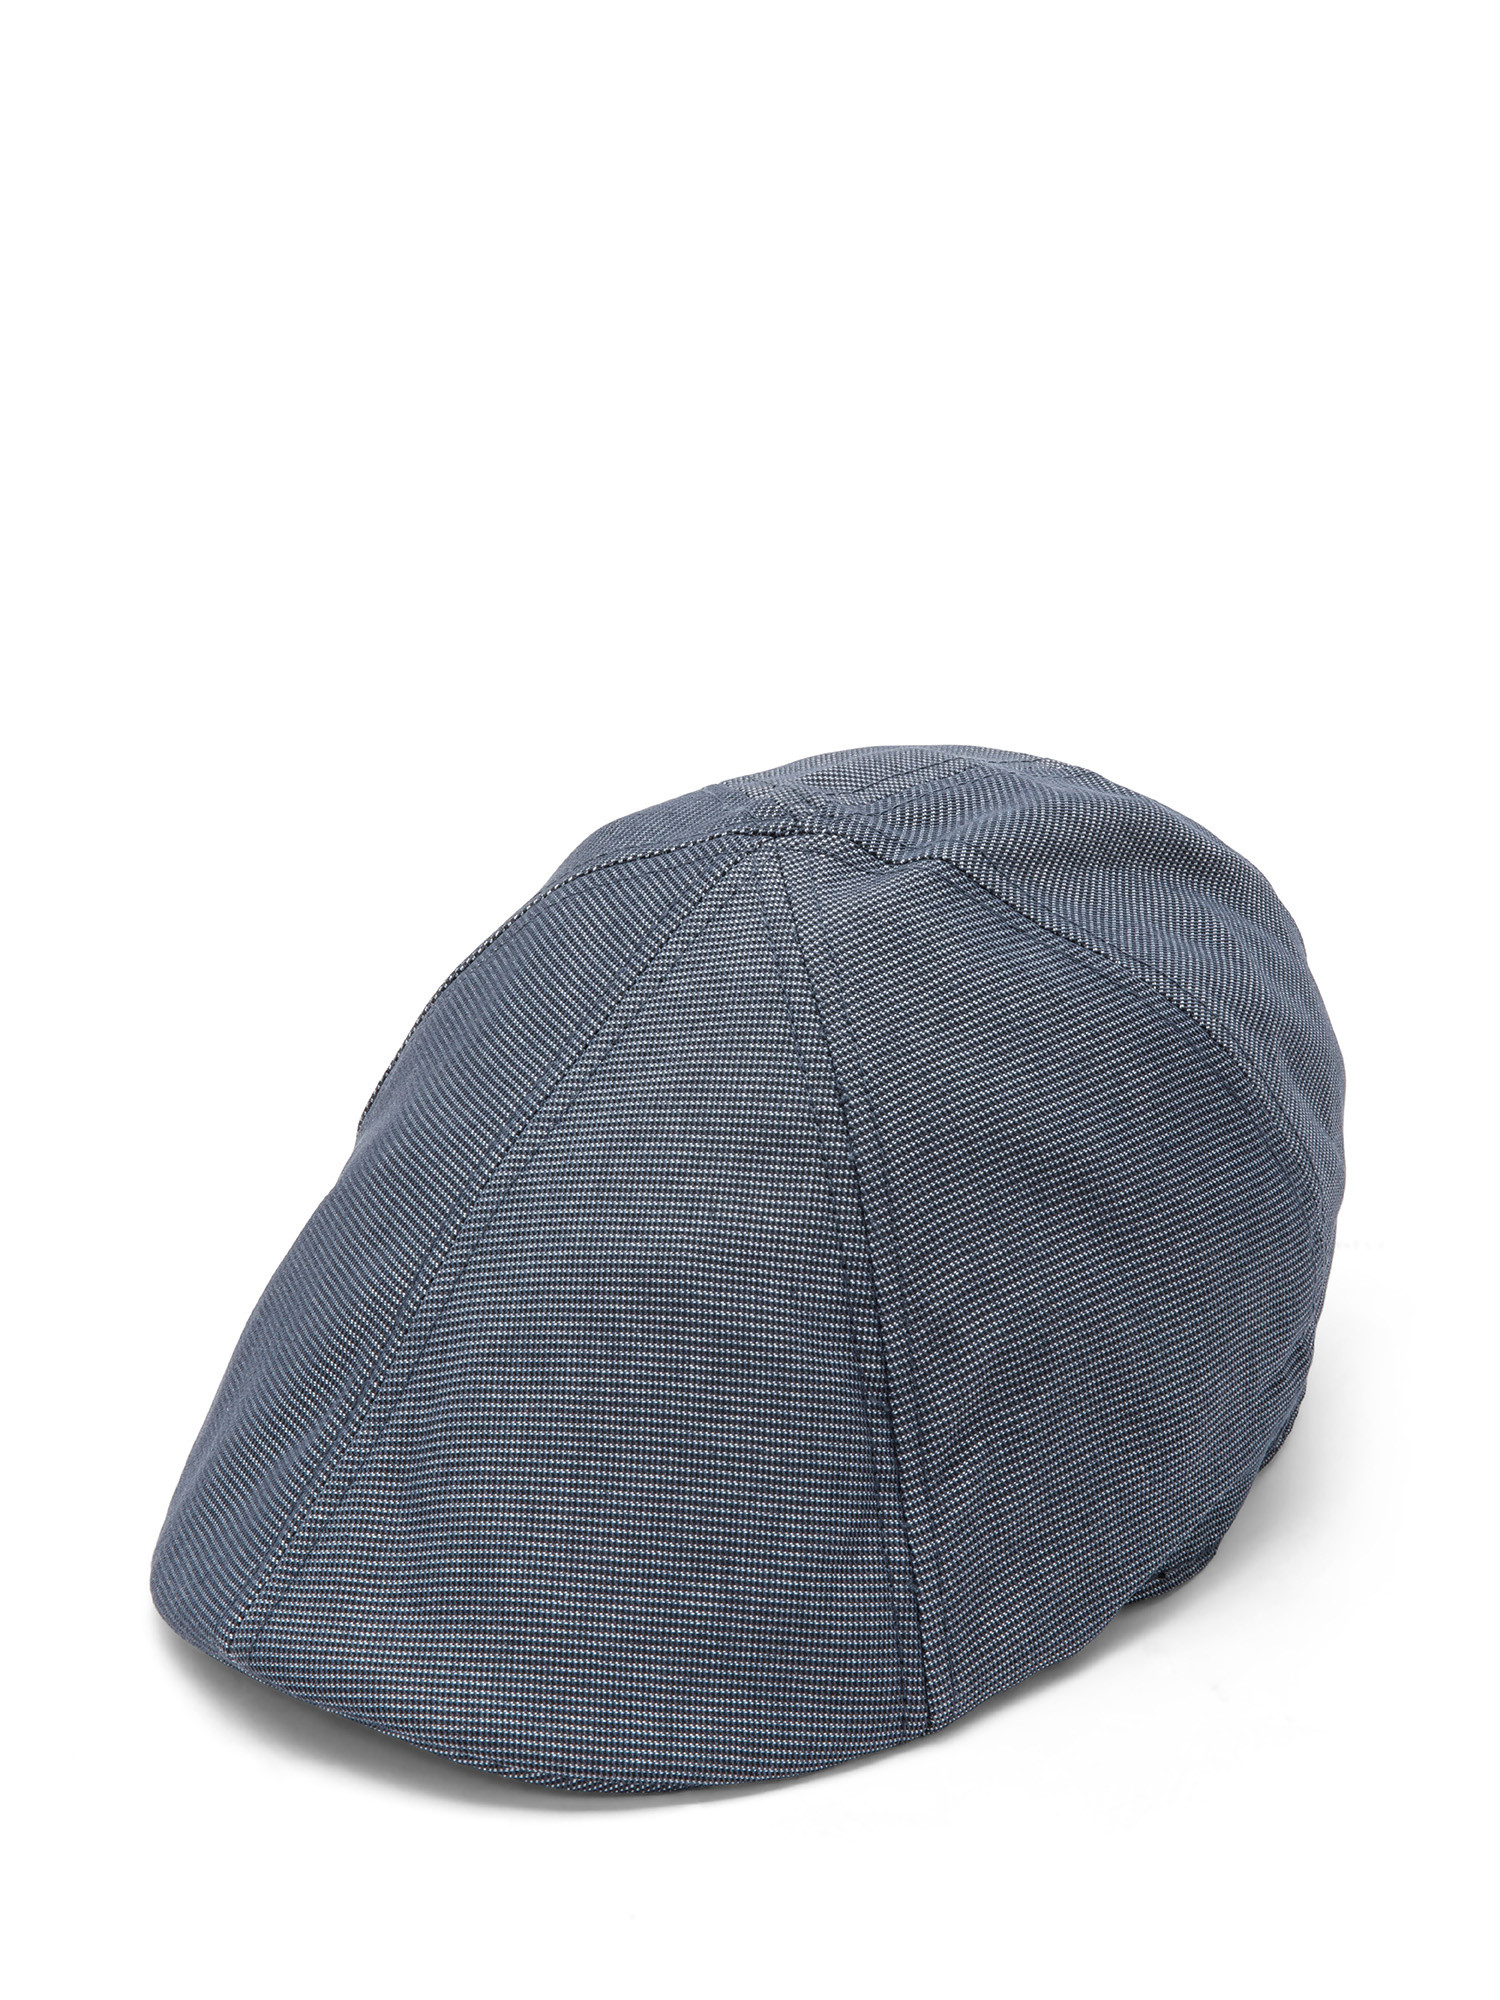 Luca D'Altieri - Cotton cap, Dark Blue, large image number 0